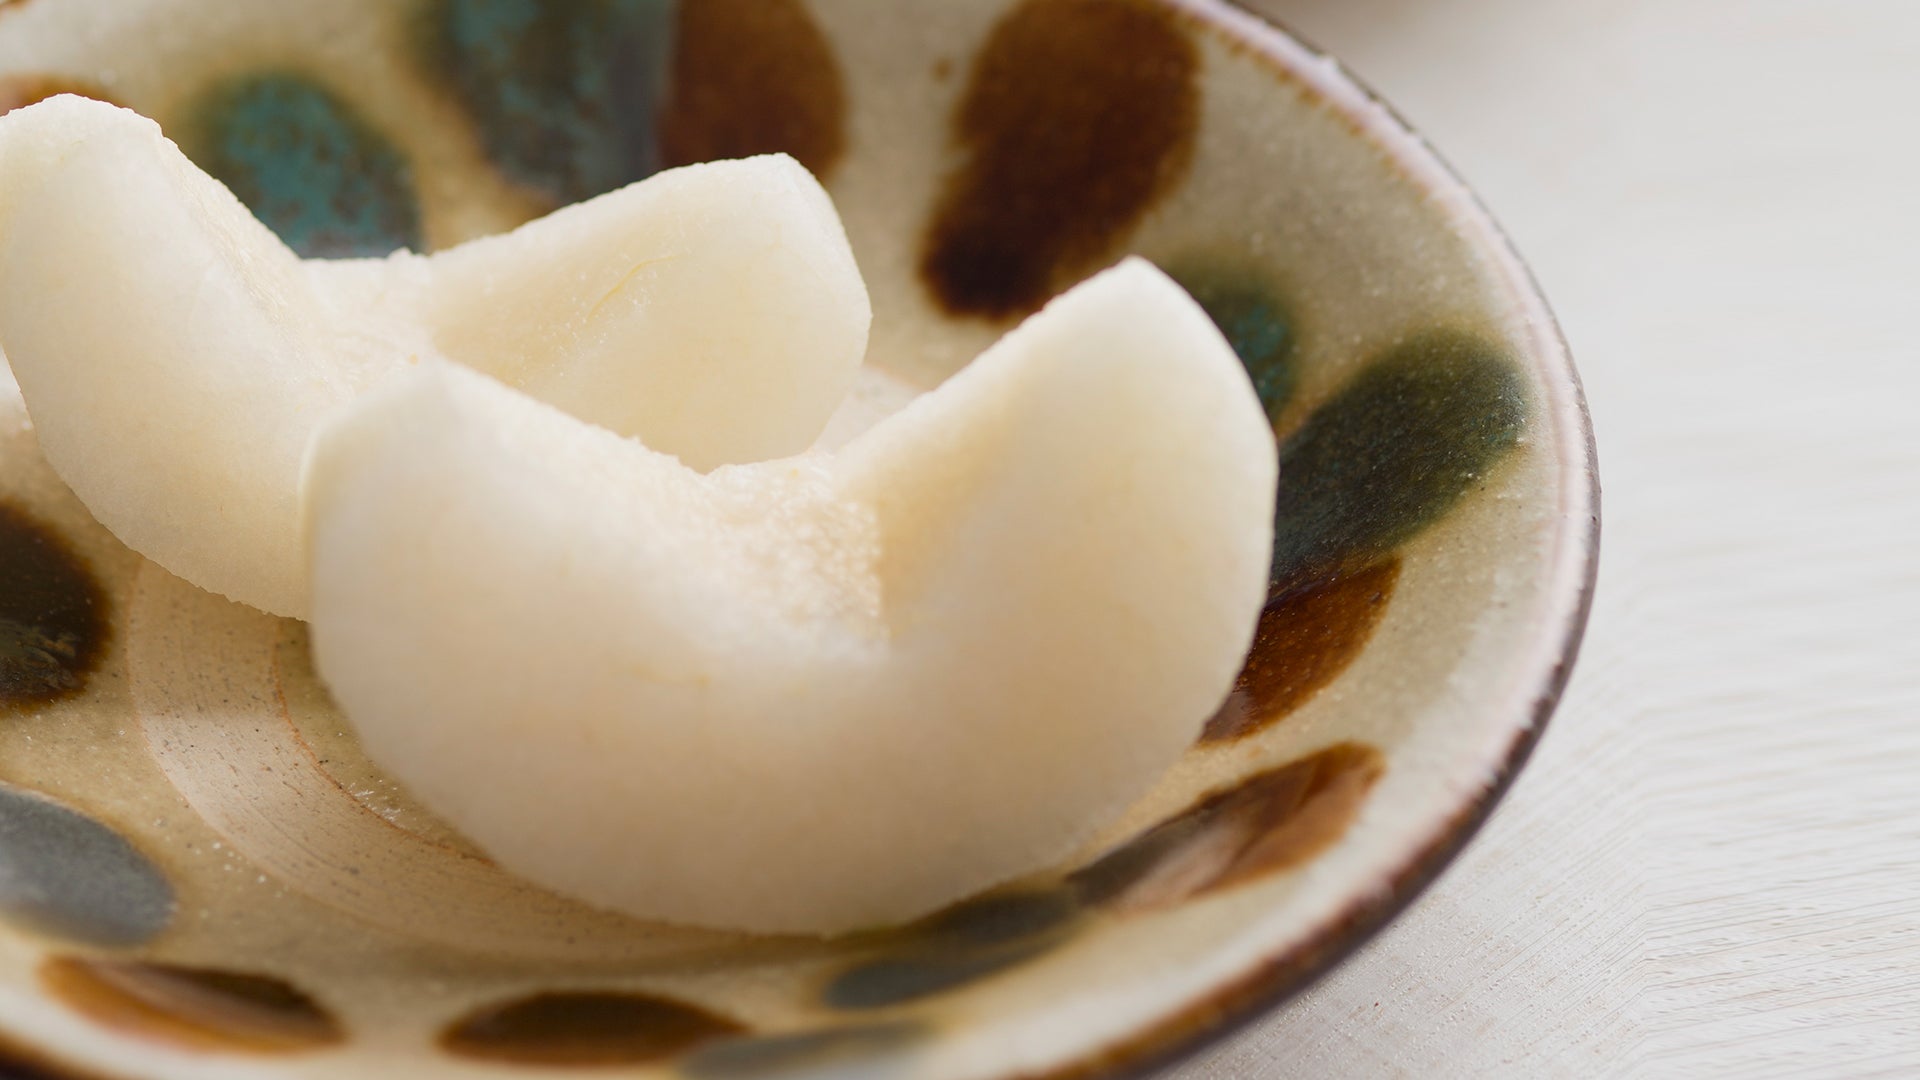 sliced Japanese Pears (Nashi pears)